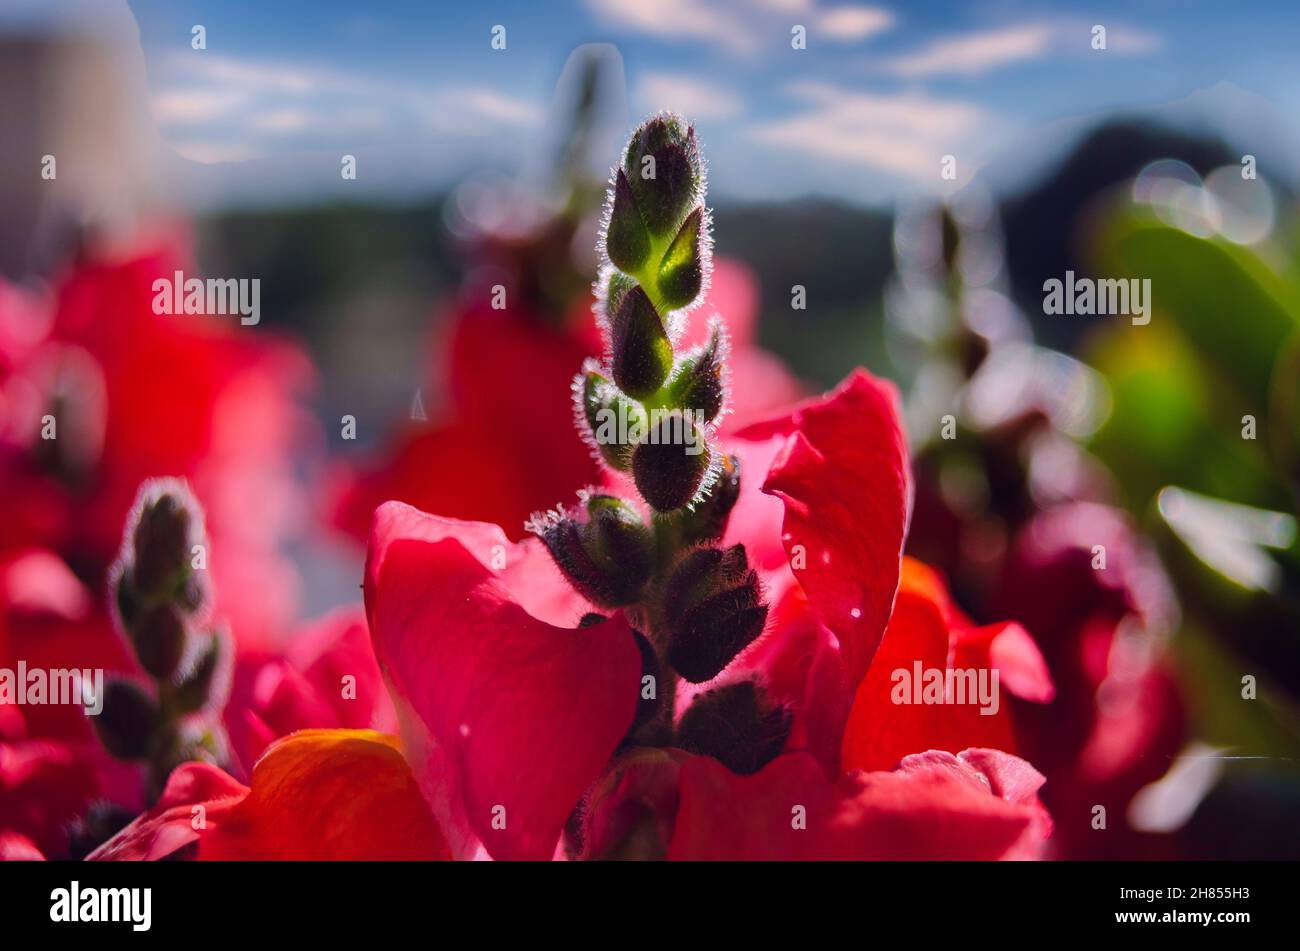 Closeup of a red antirrhinum flower. Stock Photo